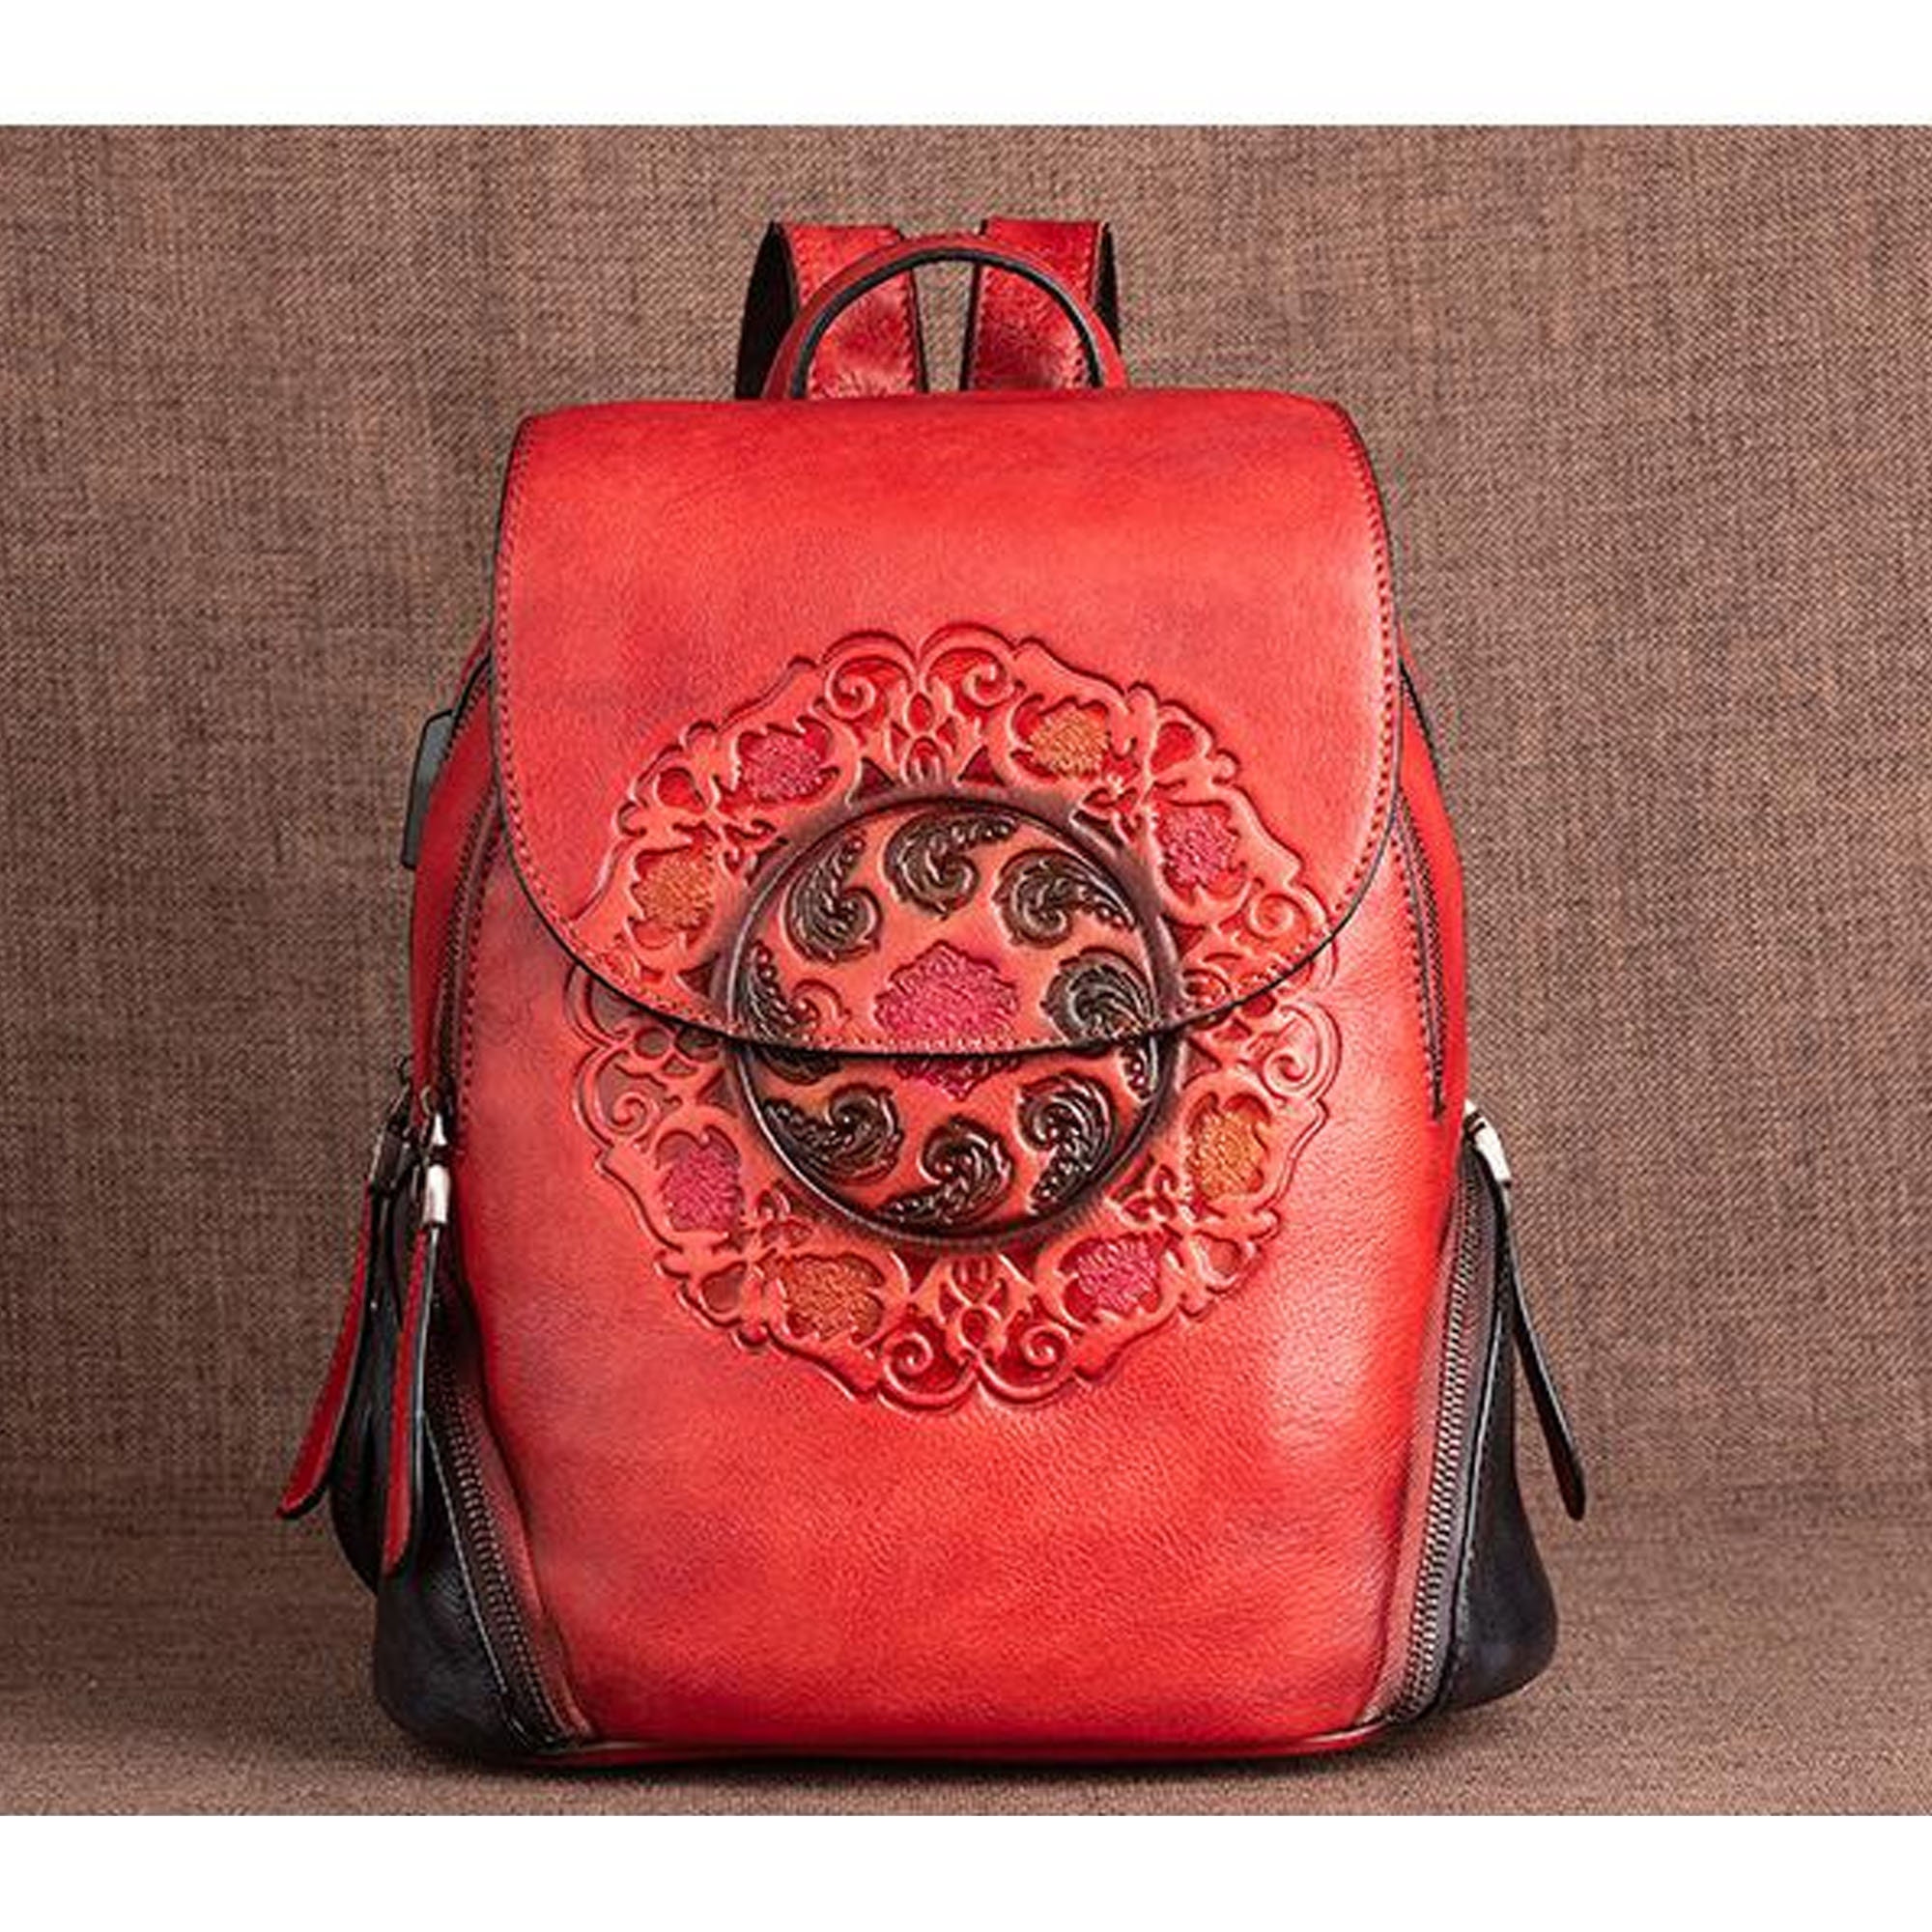 RUZIQ Women Backpack Purse Anti Theft PU Leather Waterproof Rucksack Lightweight School Travel Shoulder Bag 